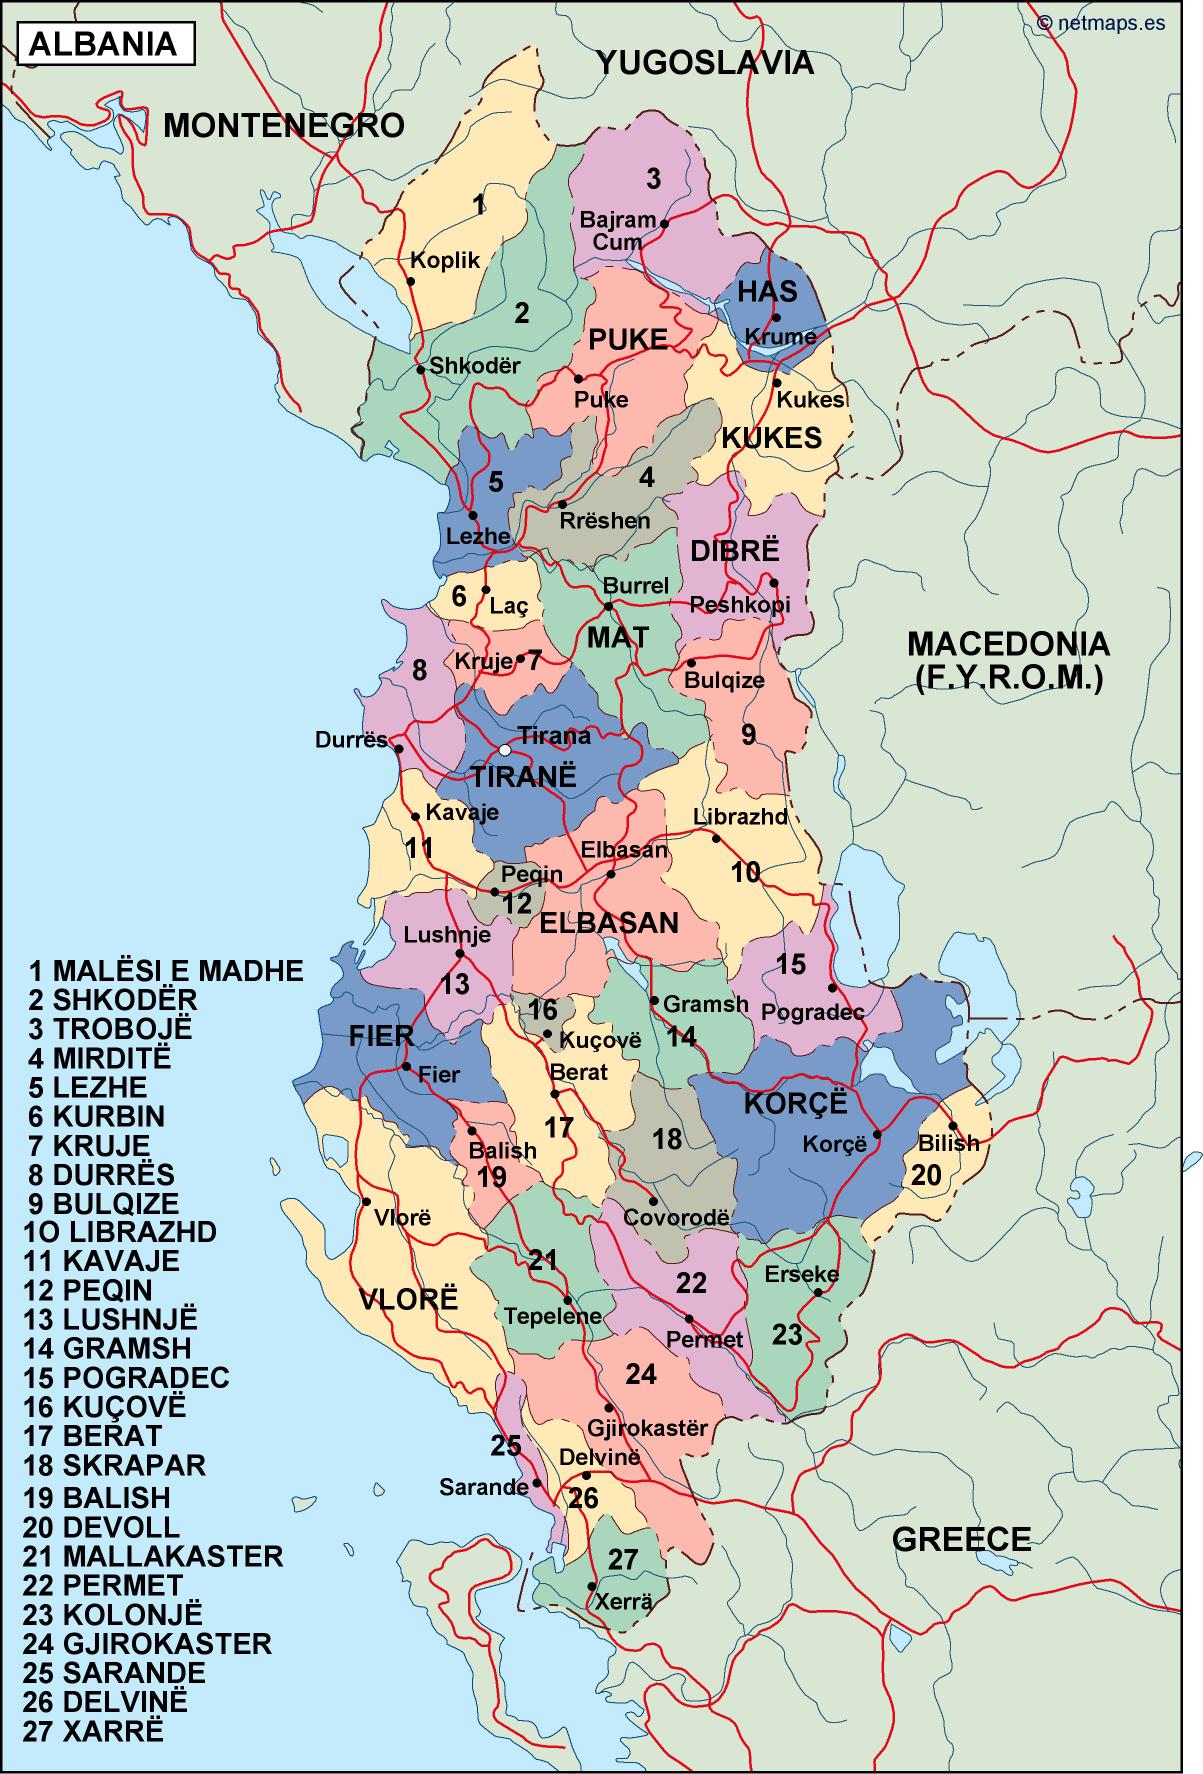 albania political map. Illustrator Vector Eps maps. Eps Illustrator Map